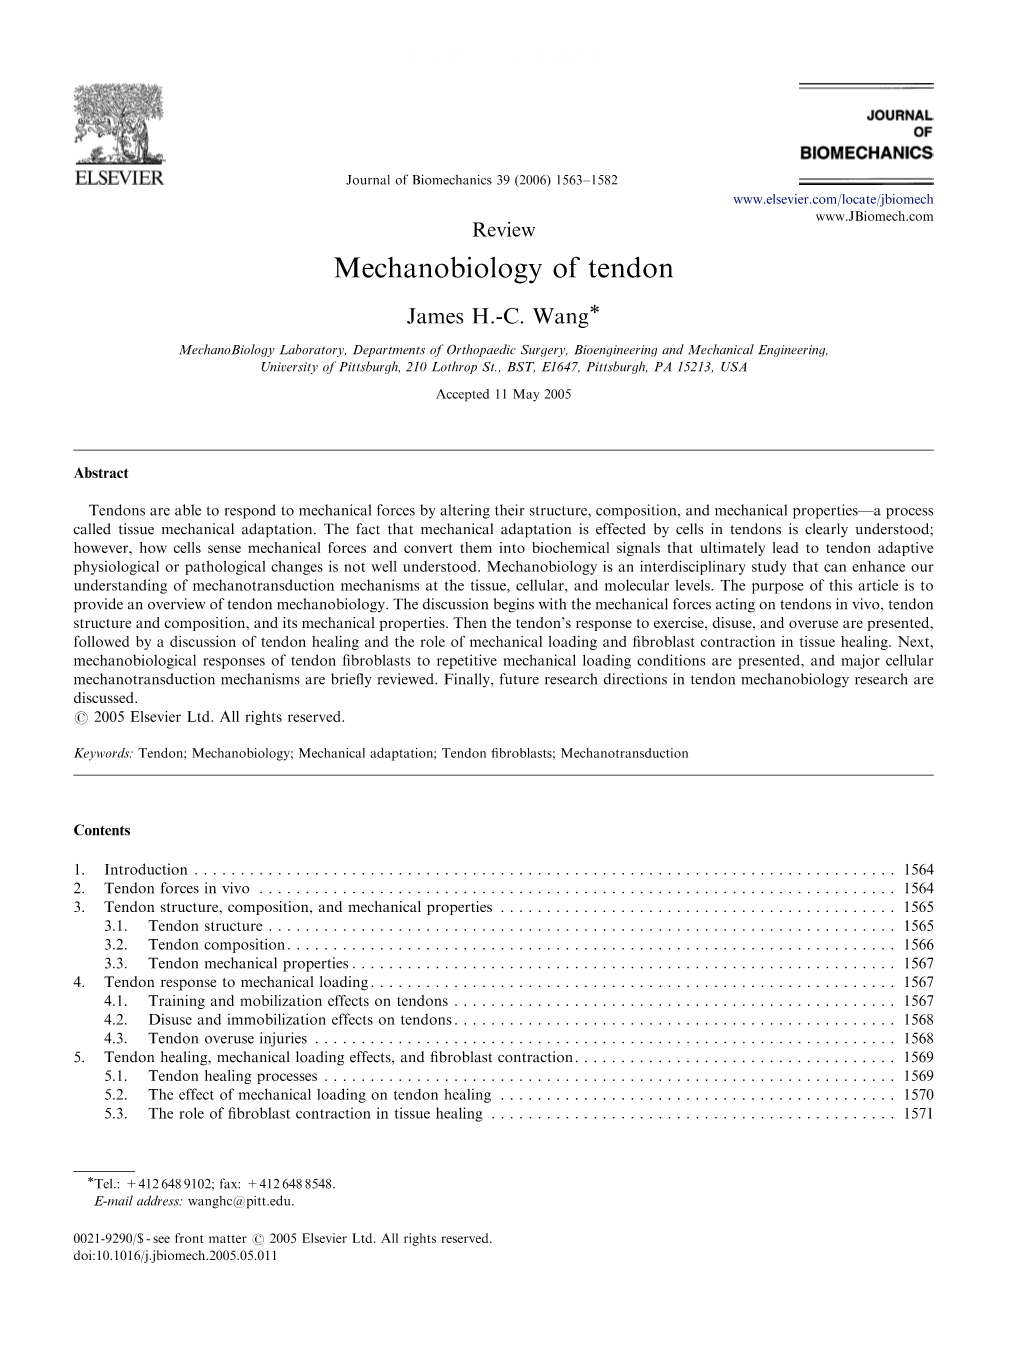 Wang (2006) Mechanobiology of Tendon.Pdf